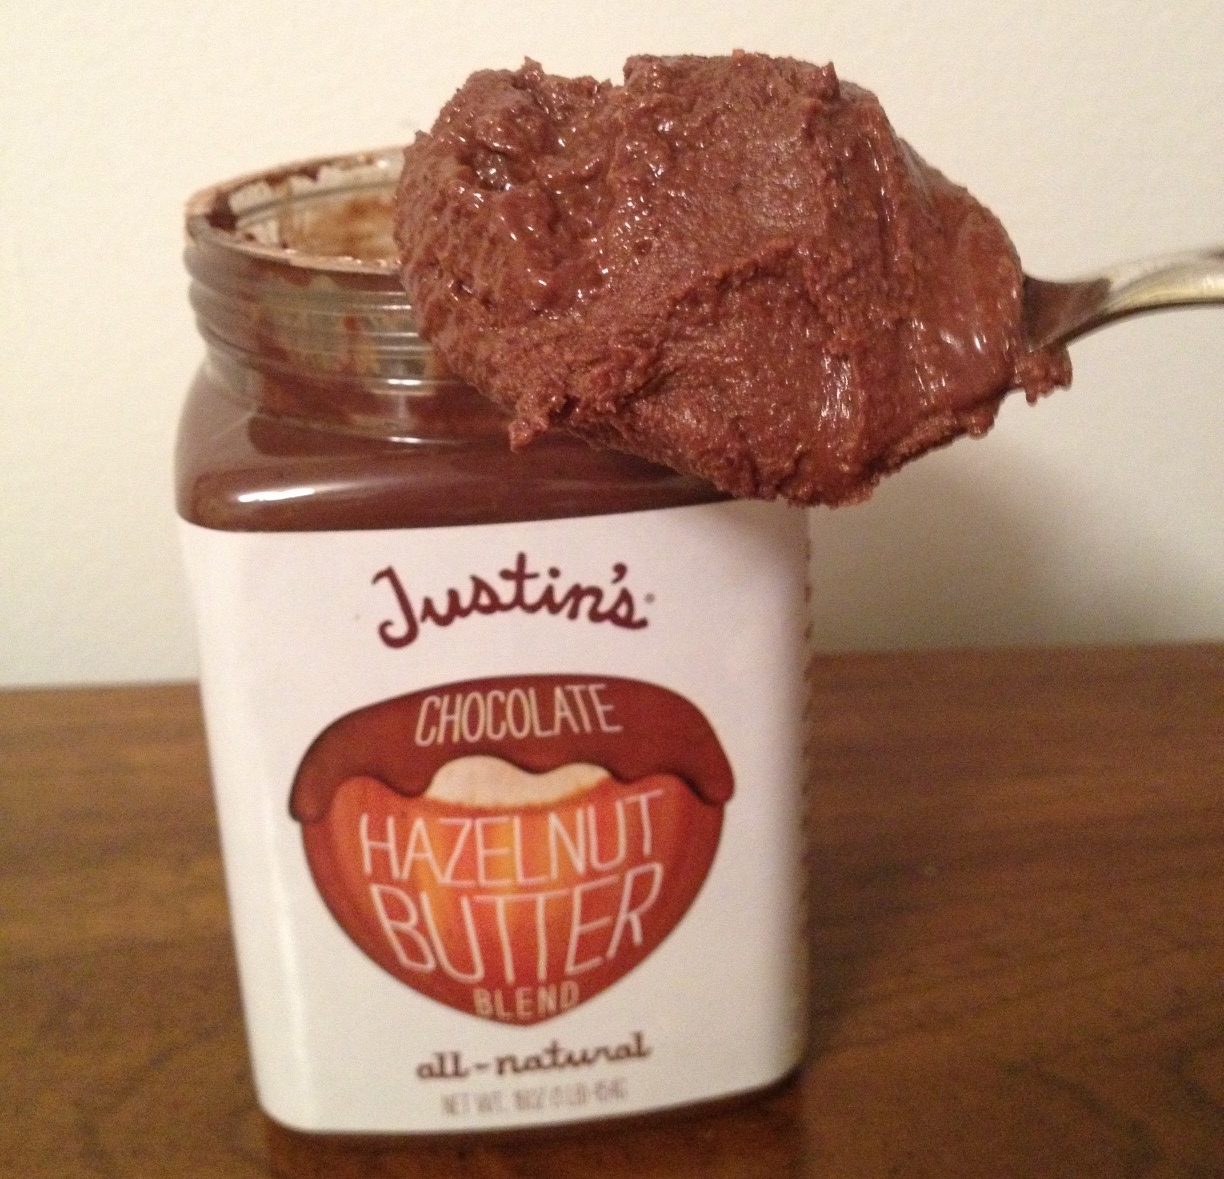 Justin’s Chocolate Hazelnut Butter is Vegan!